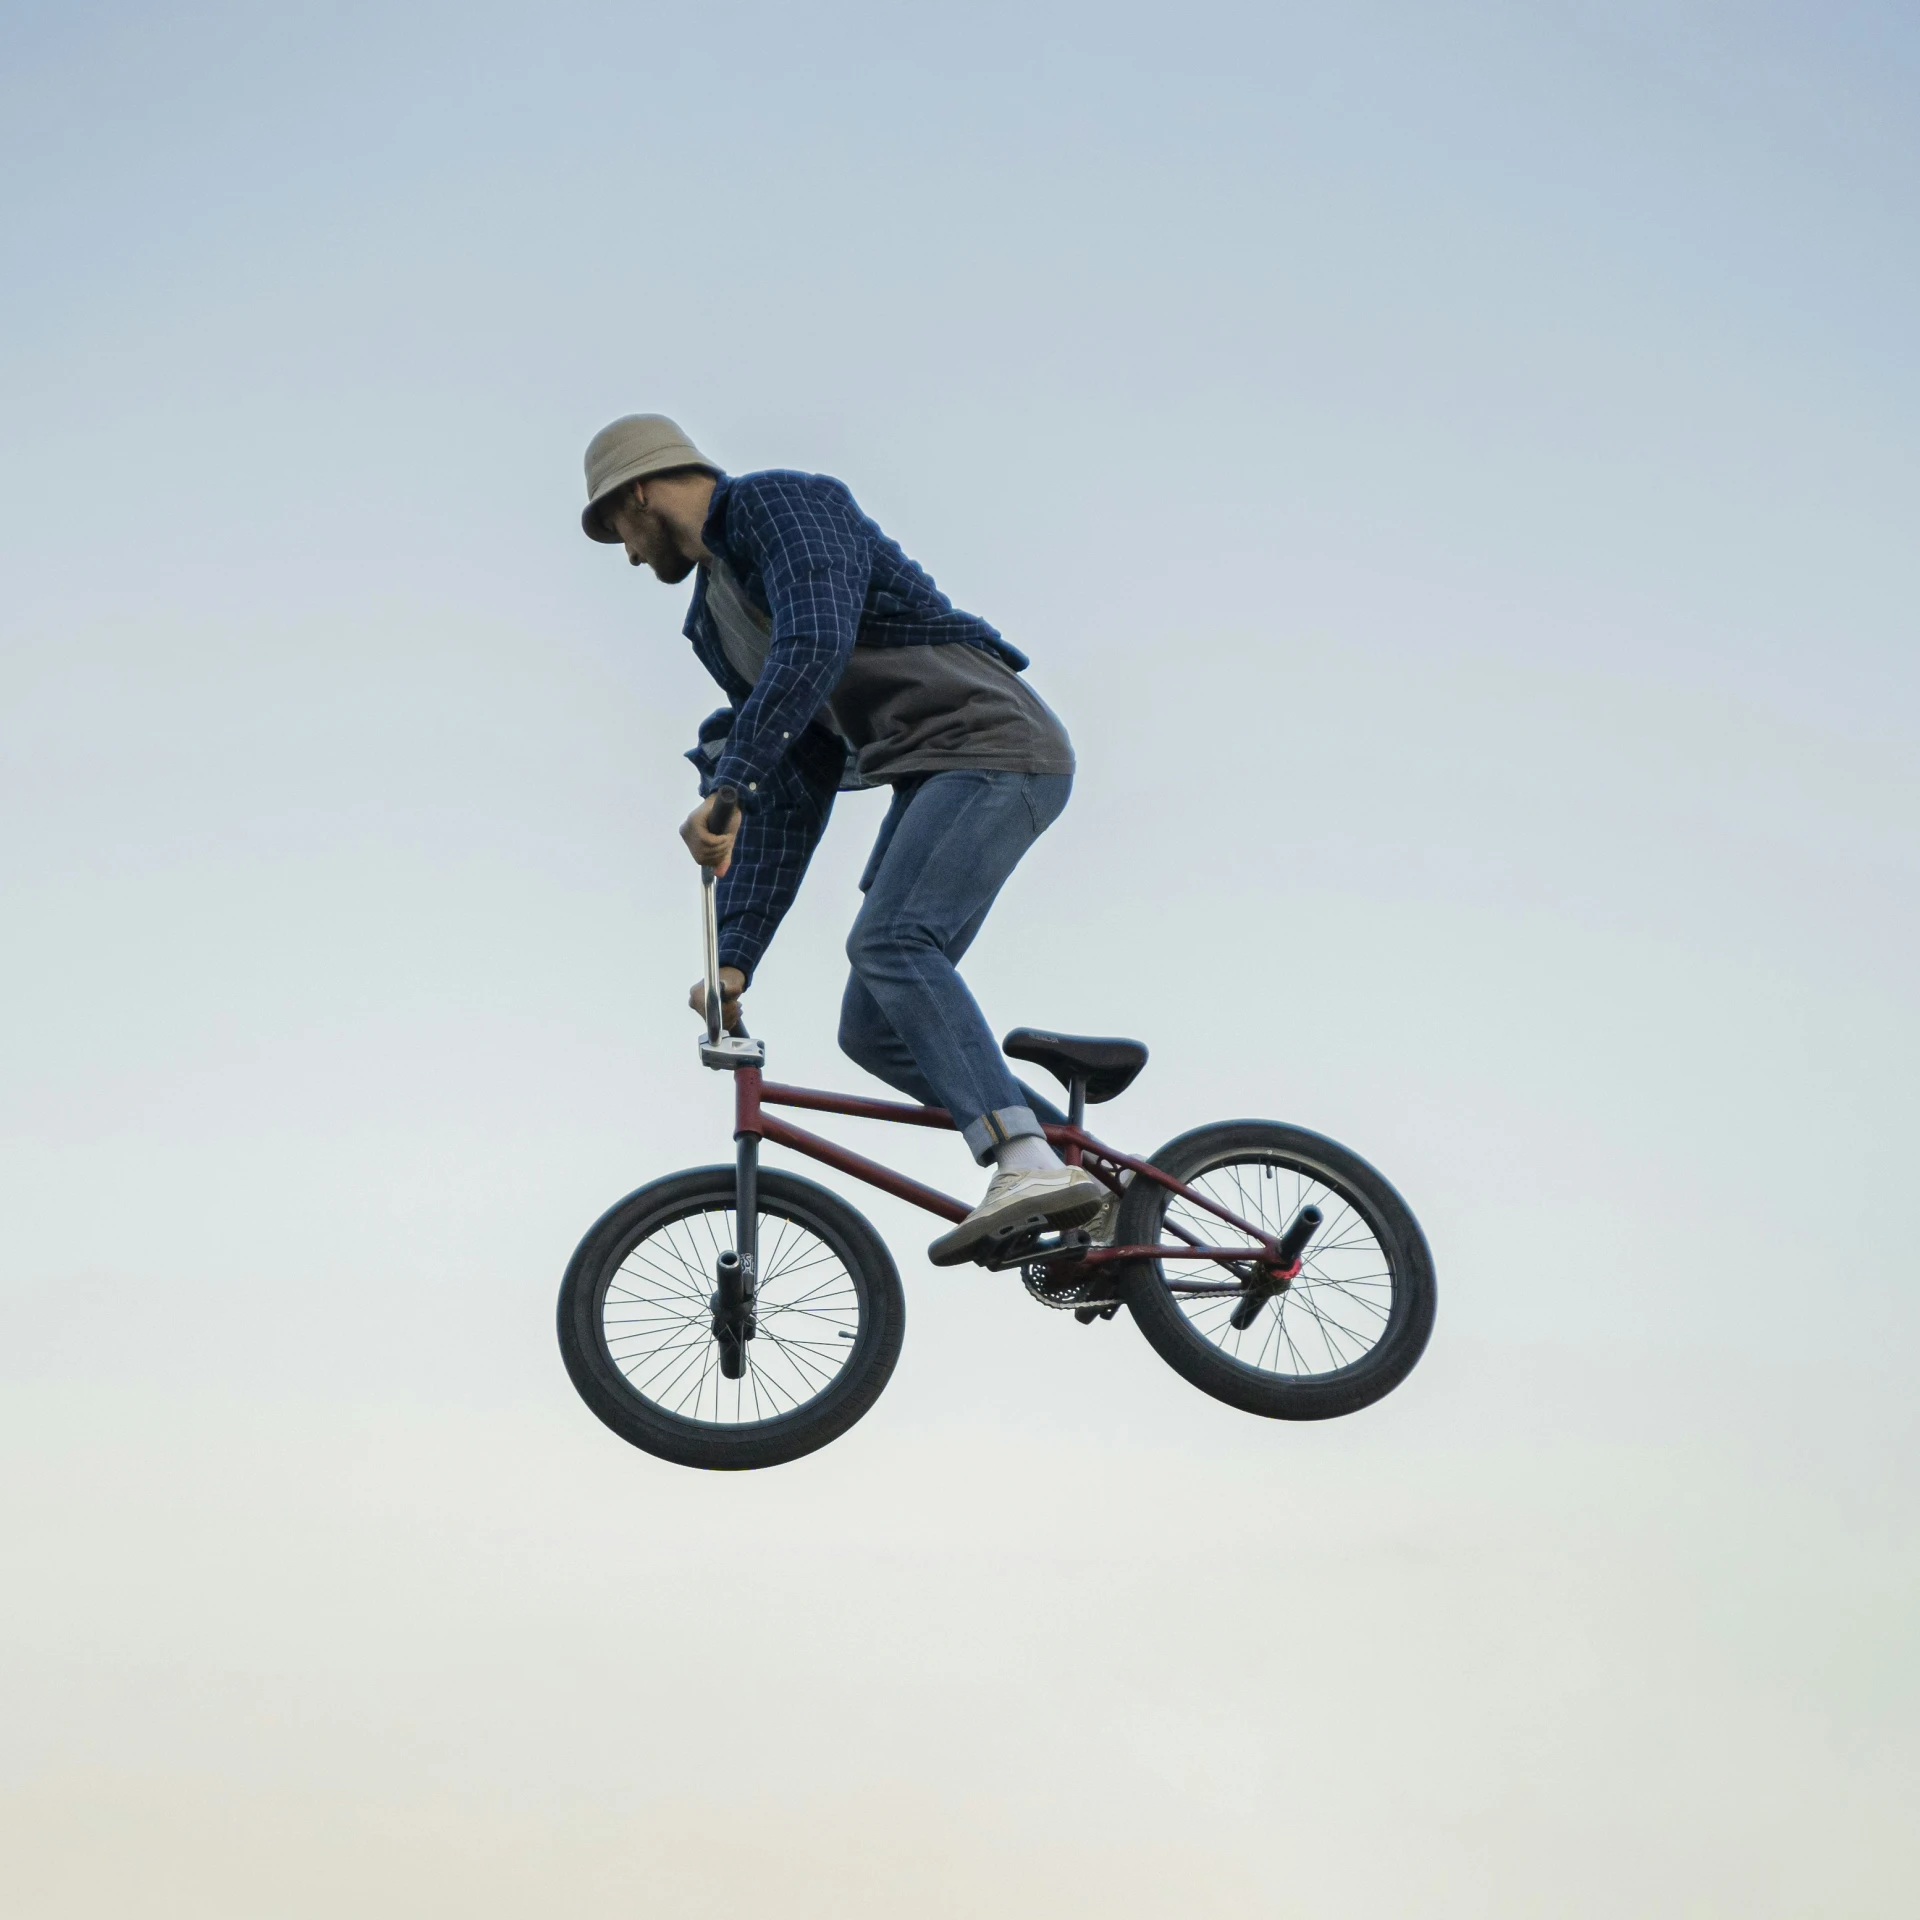 a person riding a bike high in the air